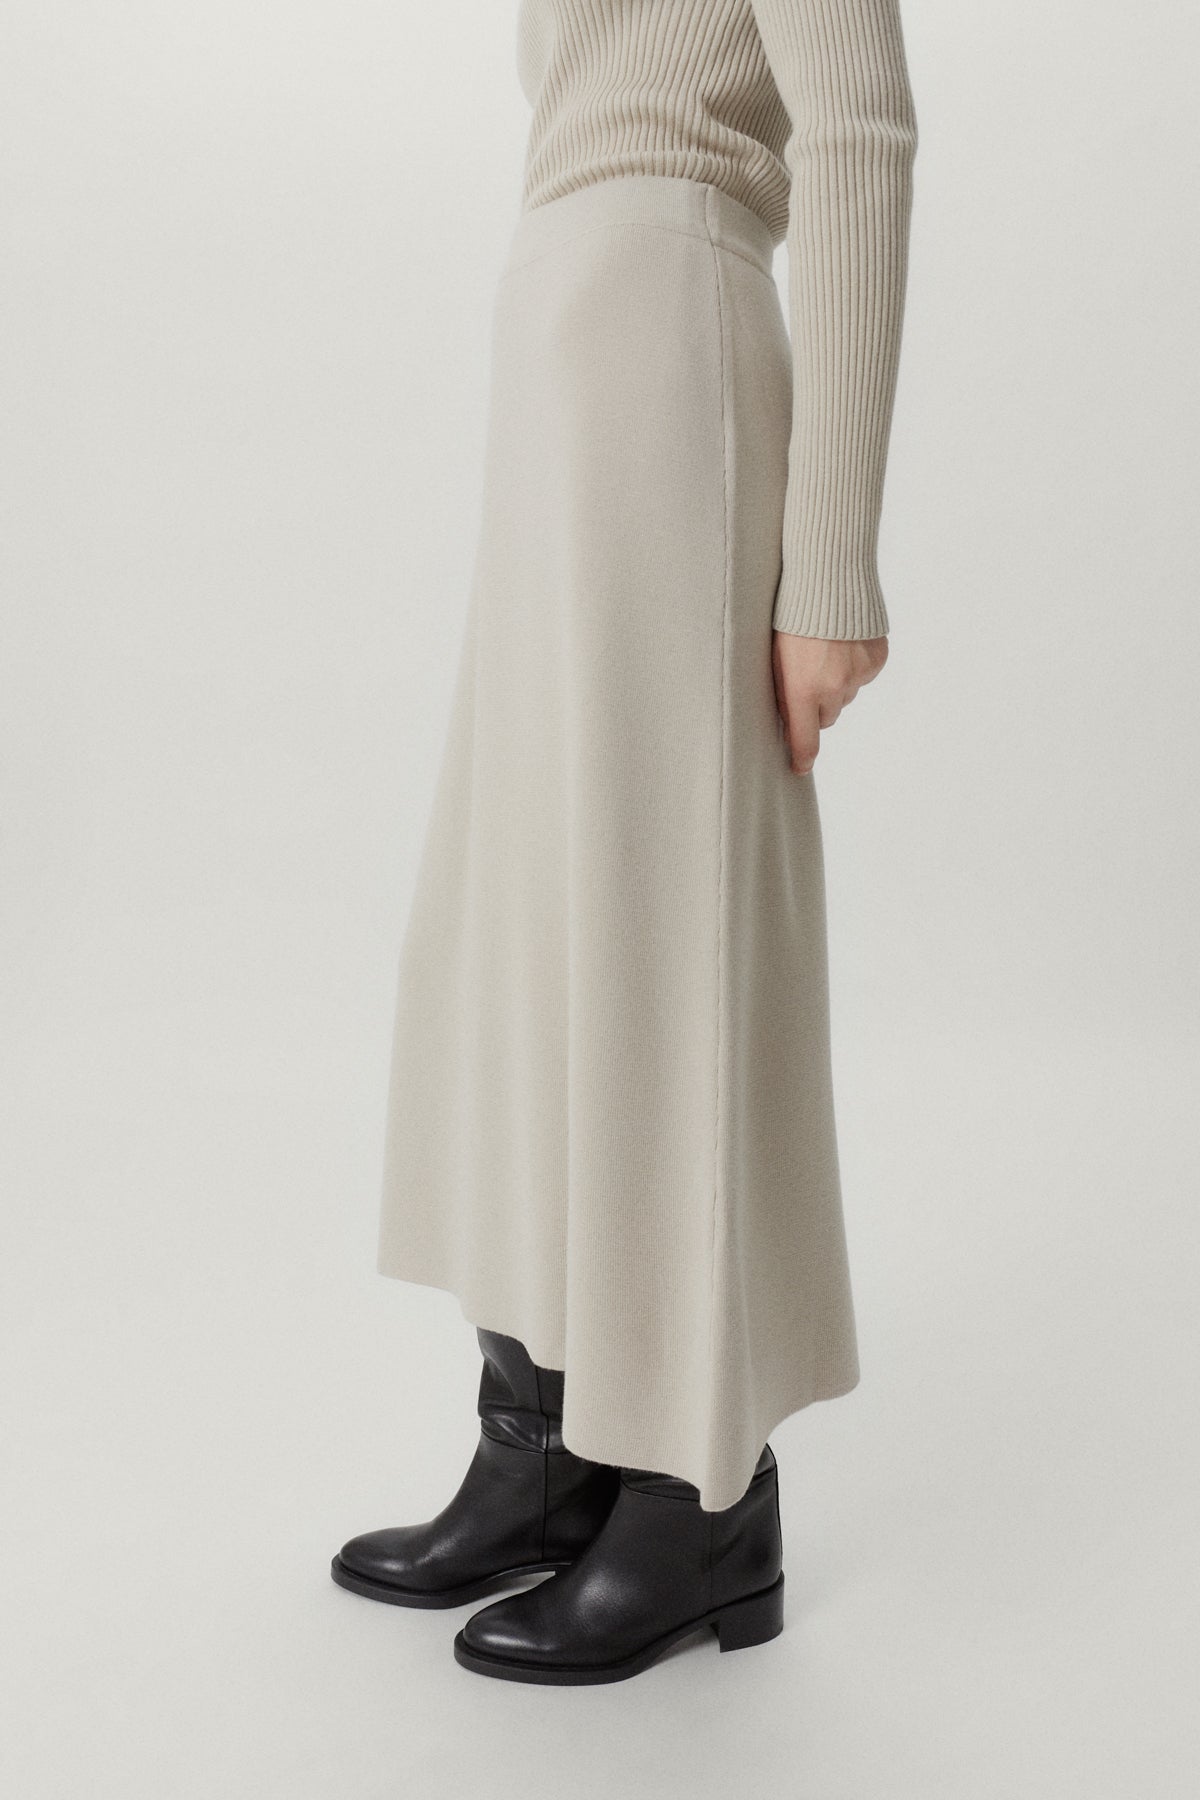 Pearl | The Merino Wool Flare Skirt